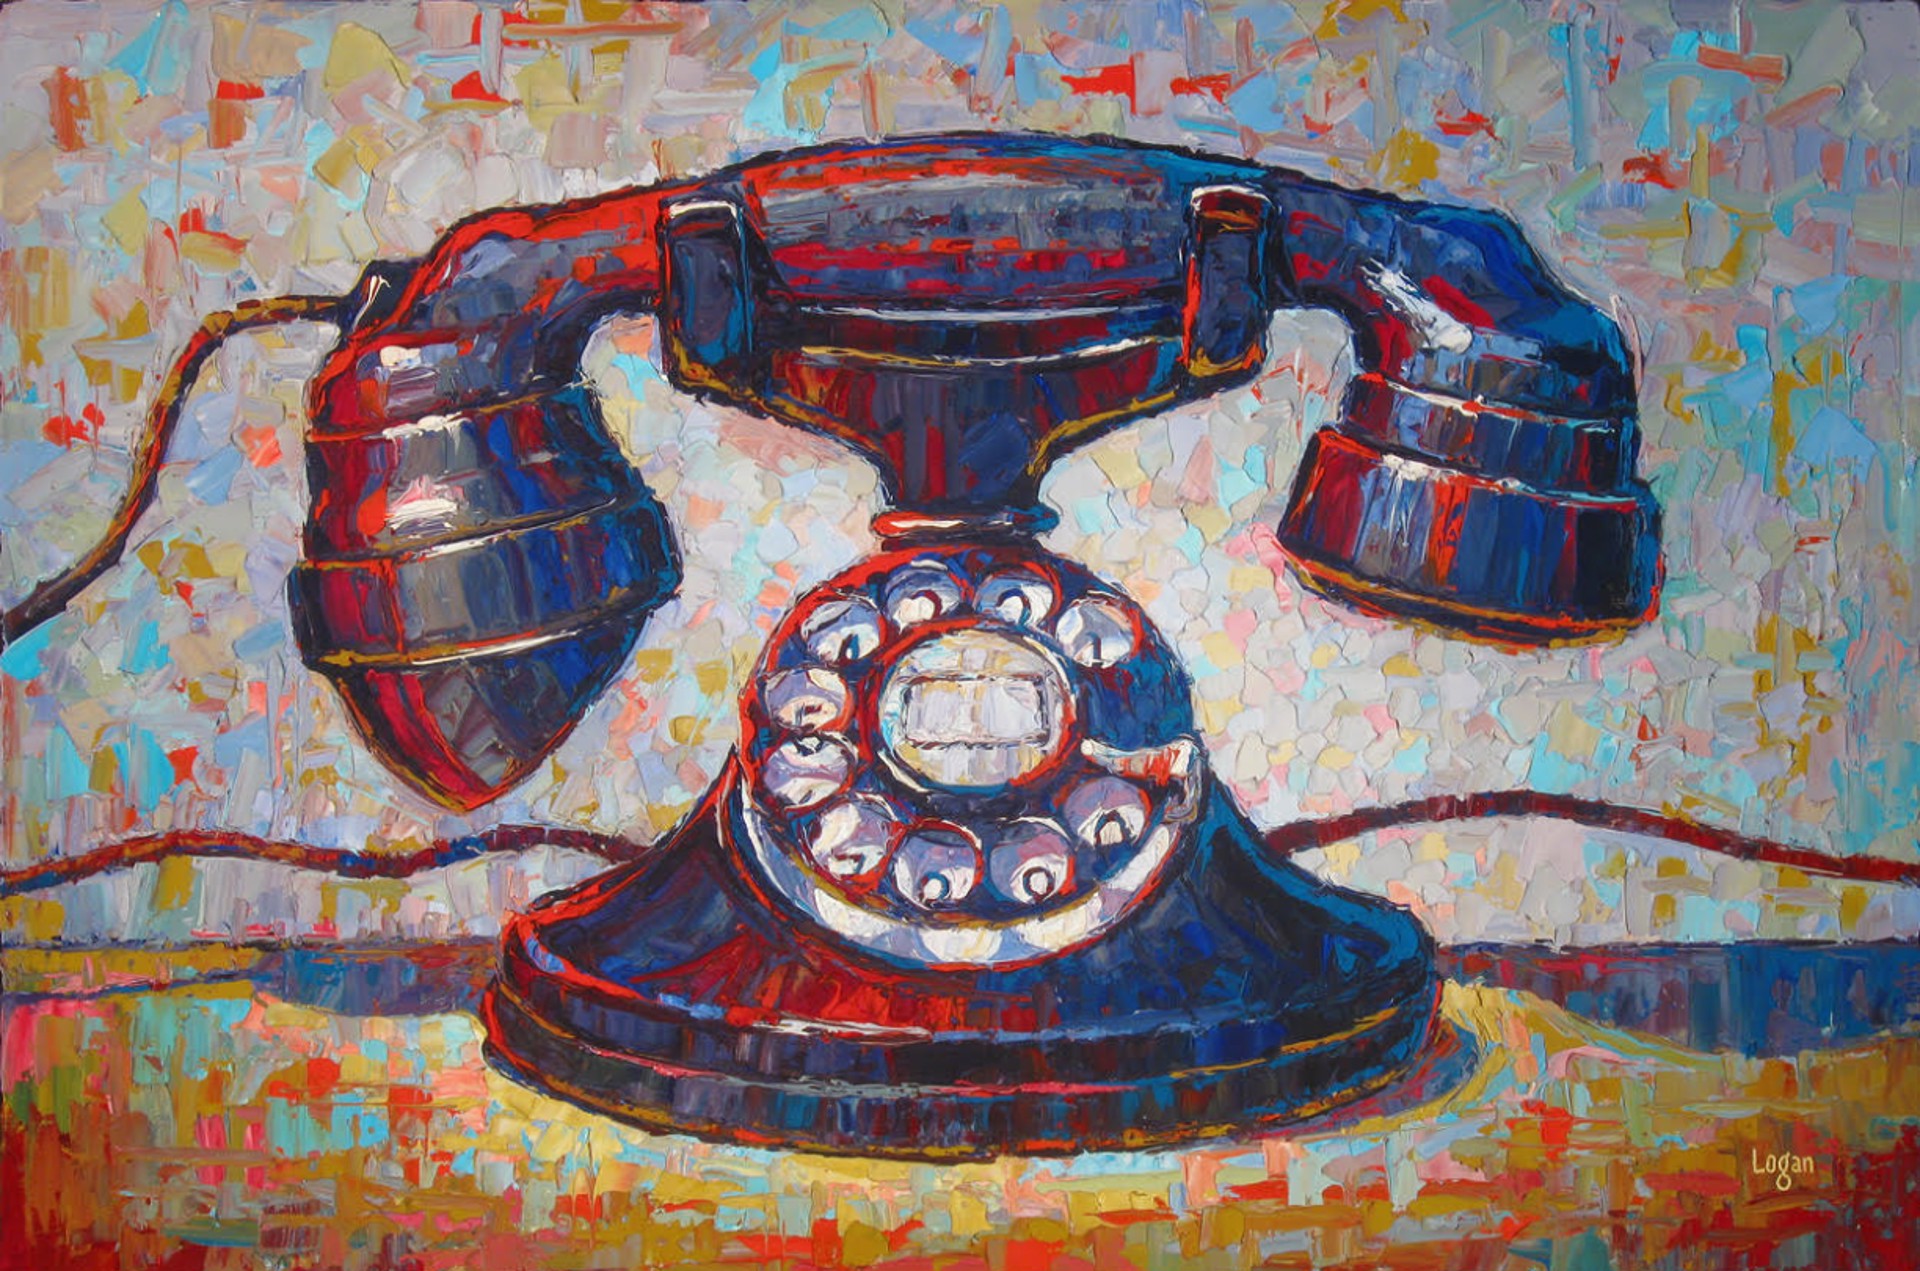 Western Electric Telephone by Raymond Logan